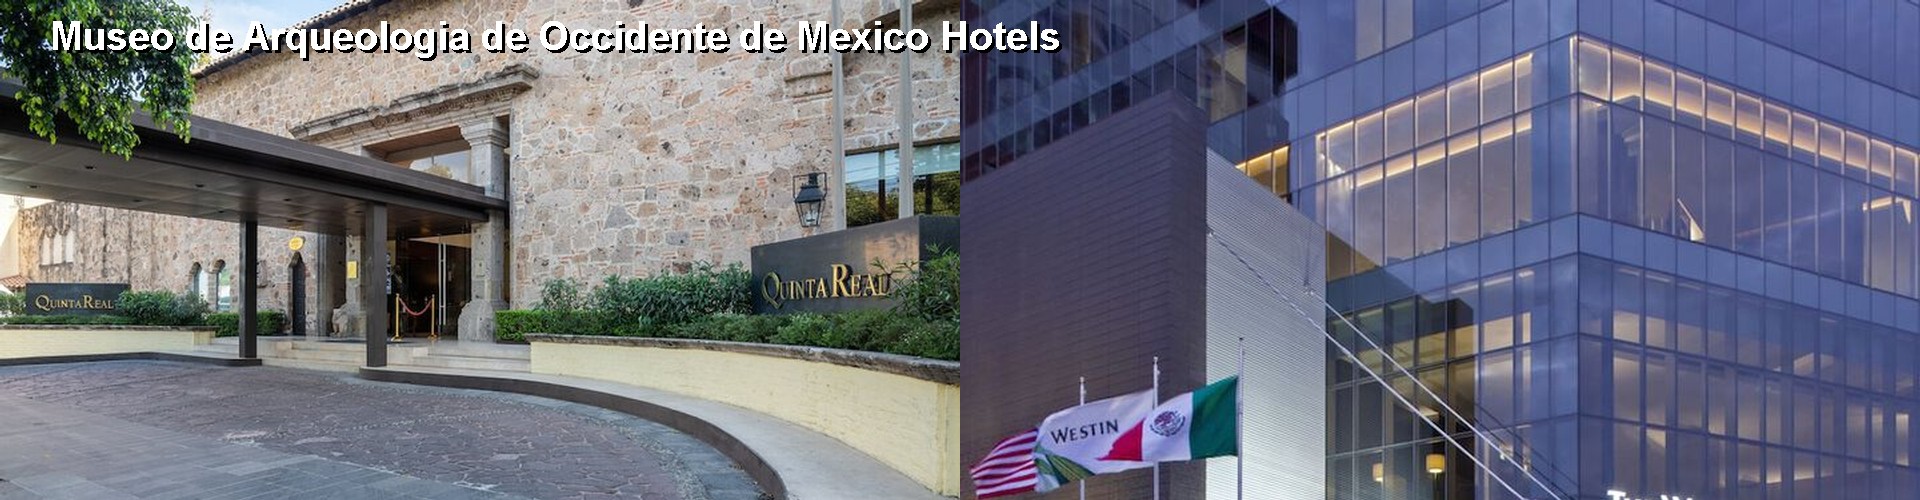 5 Best Hotels near Museo de Arqueologia de Occidente de Mexico